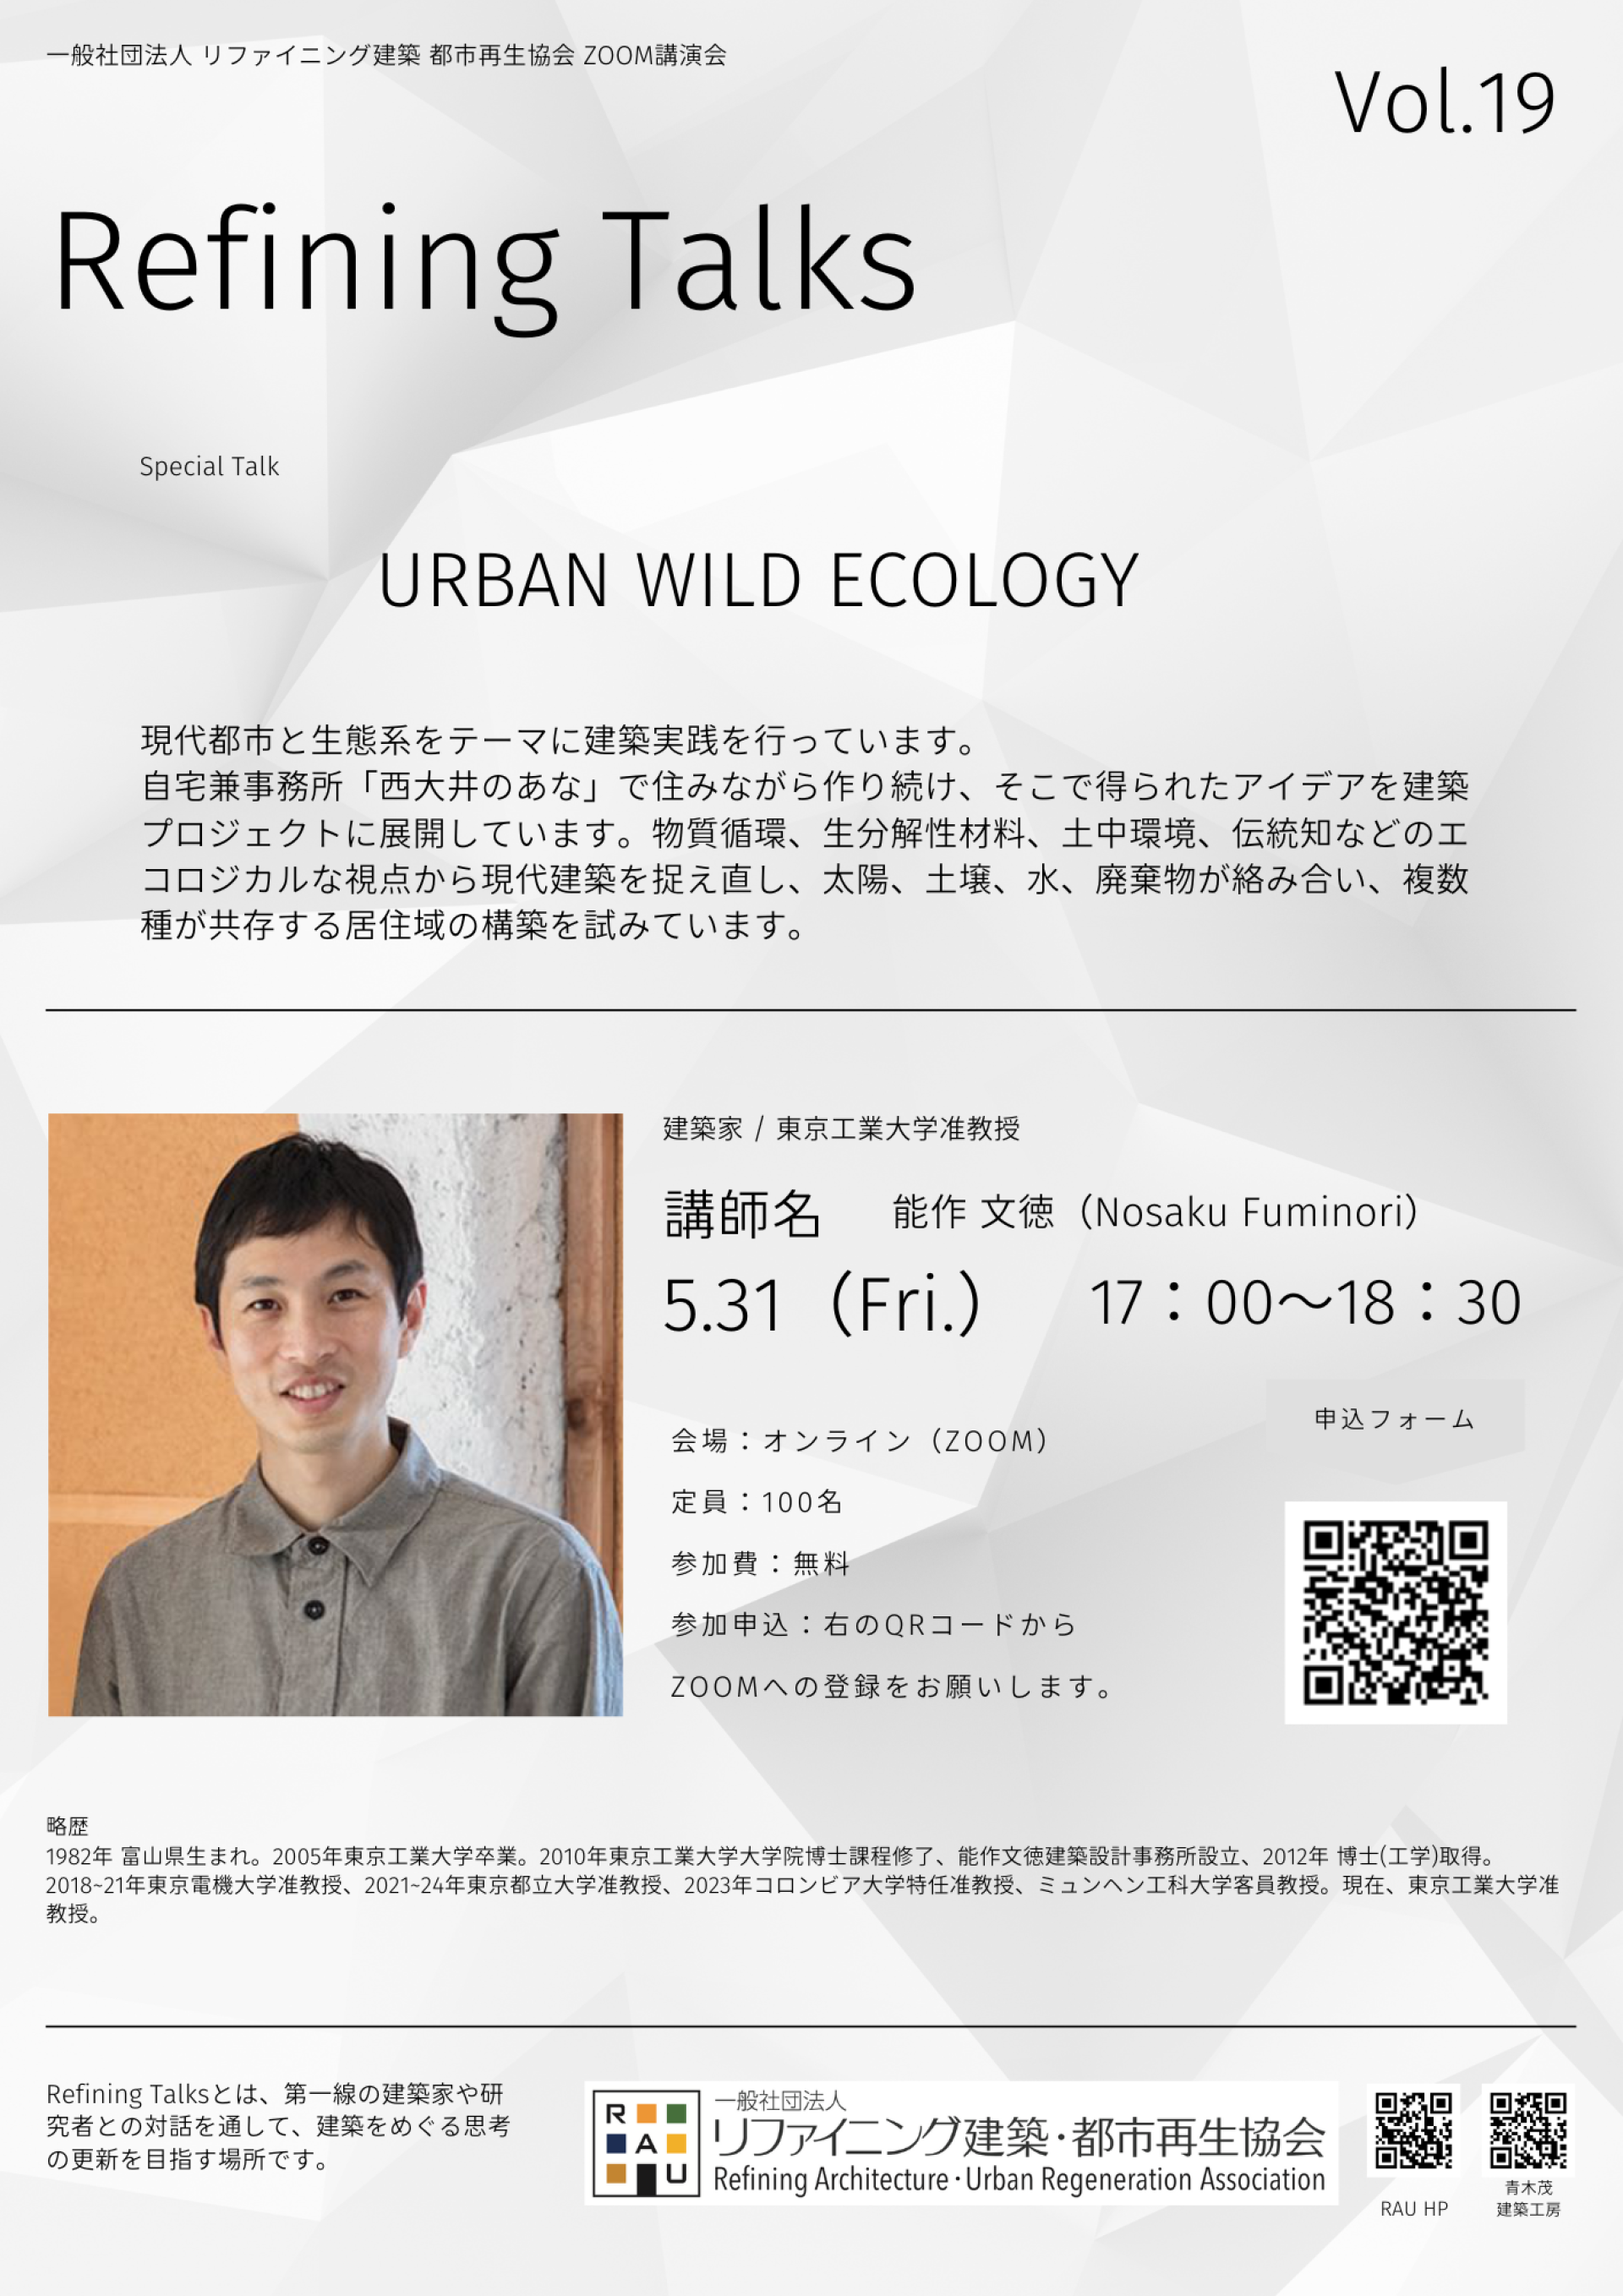 【講演会開催のお知らせ】「URBAN WILD ECOLOGY」 〜建築家・東京工業大学 准教授 能作文徳先生〜